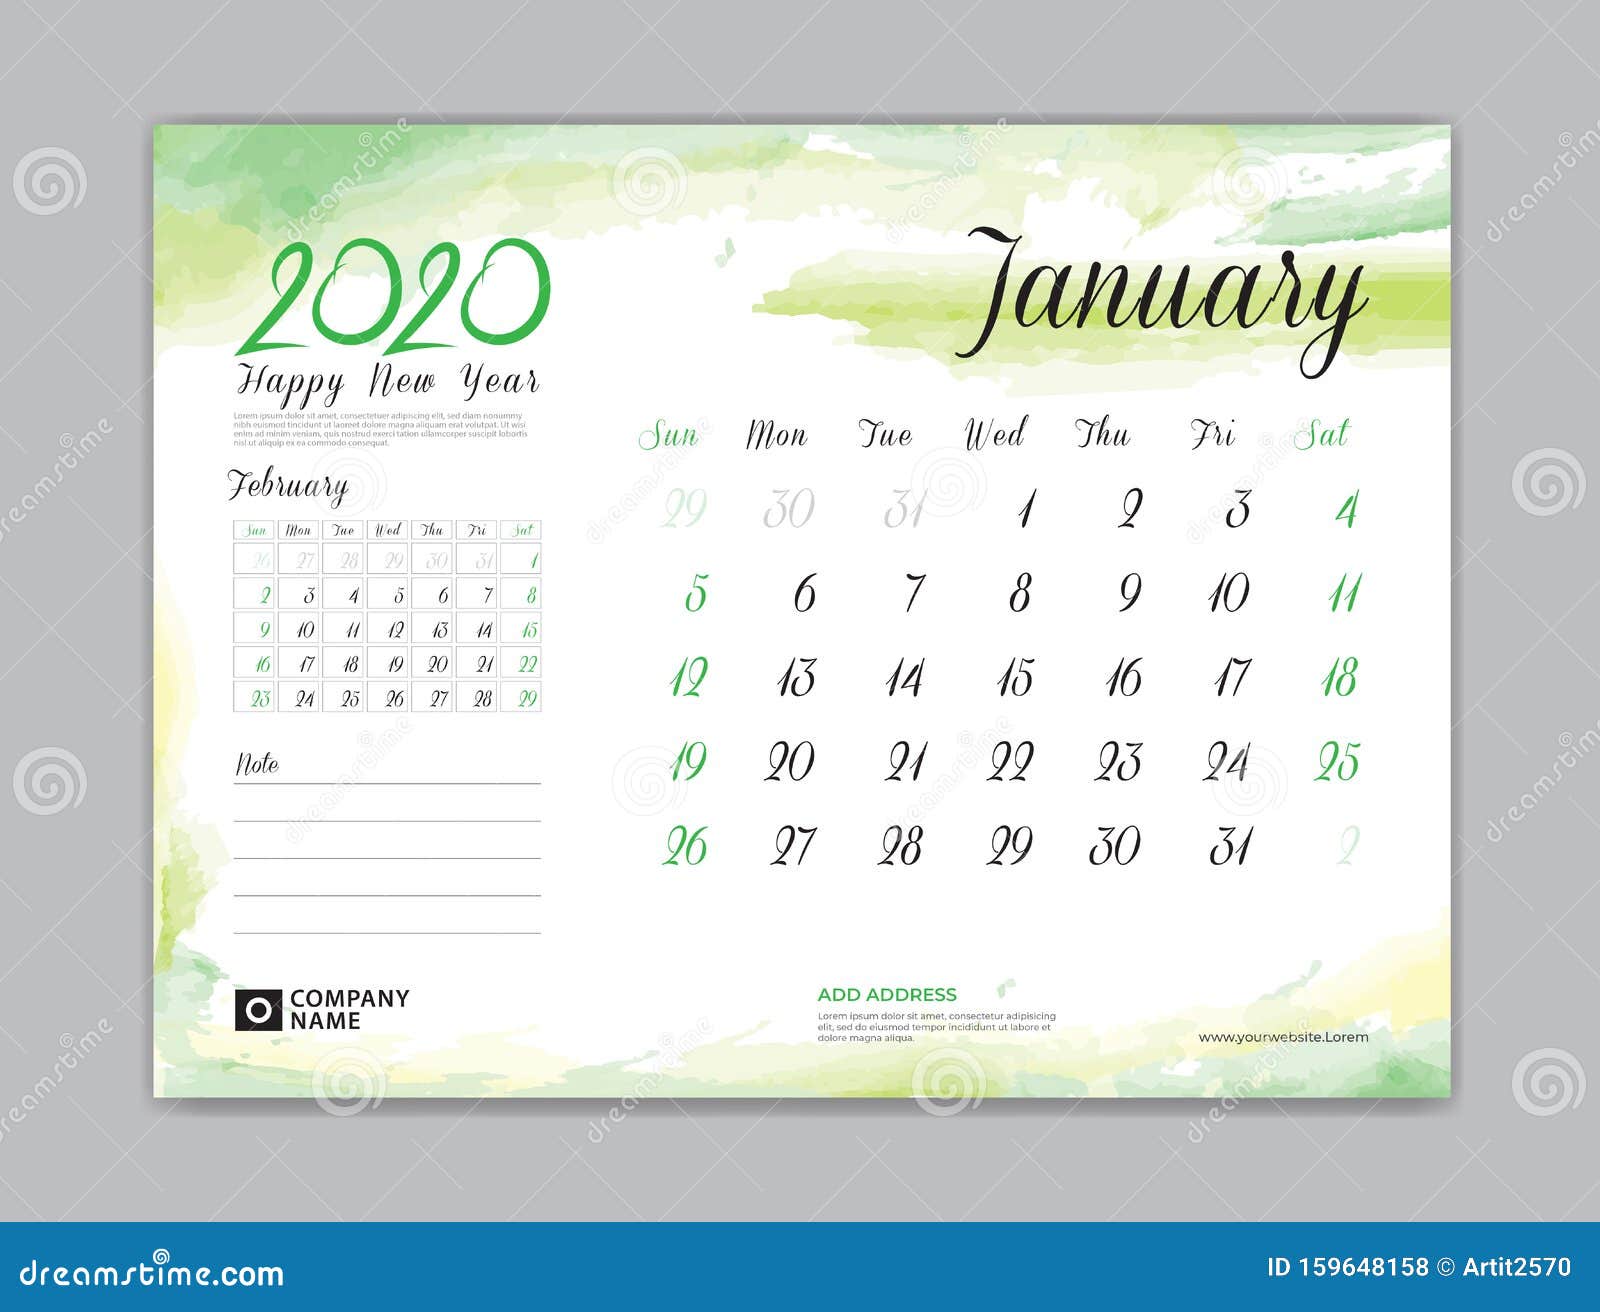 Calendar For 2020 Year Template January Month Desk Calendar 2020